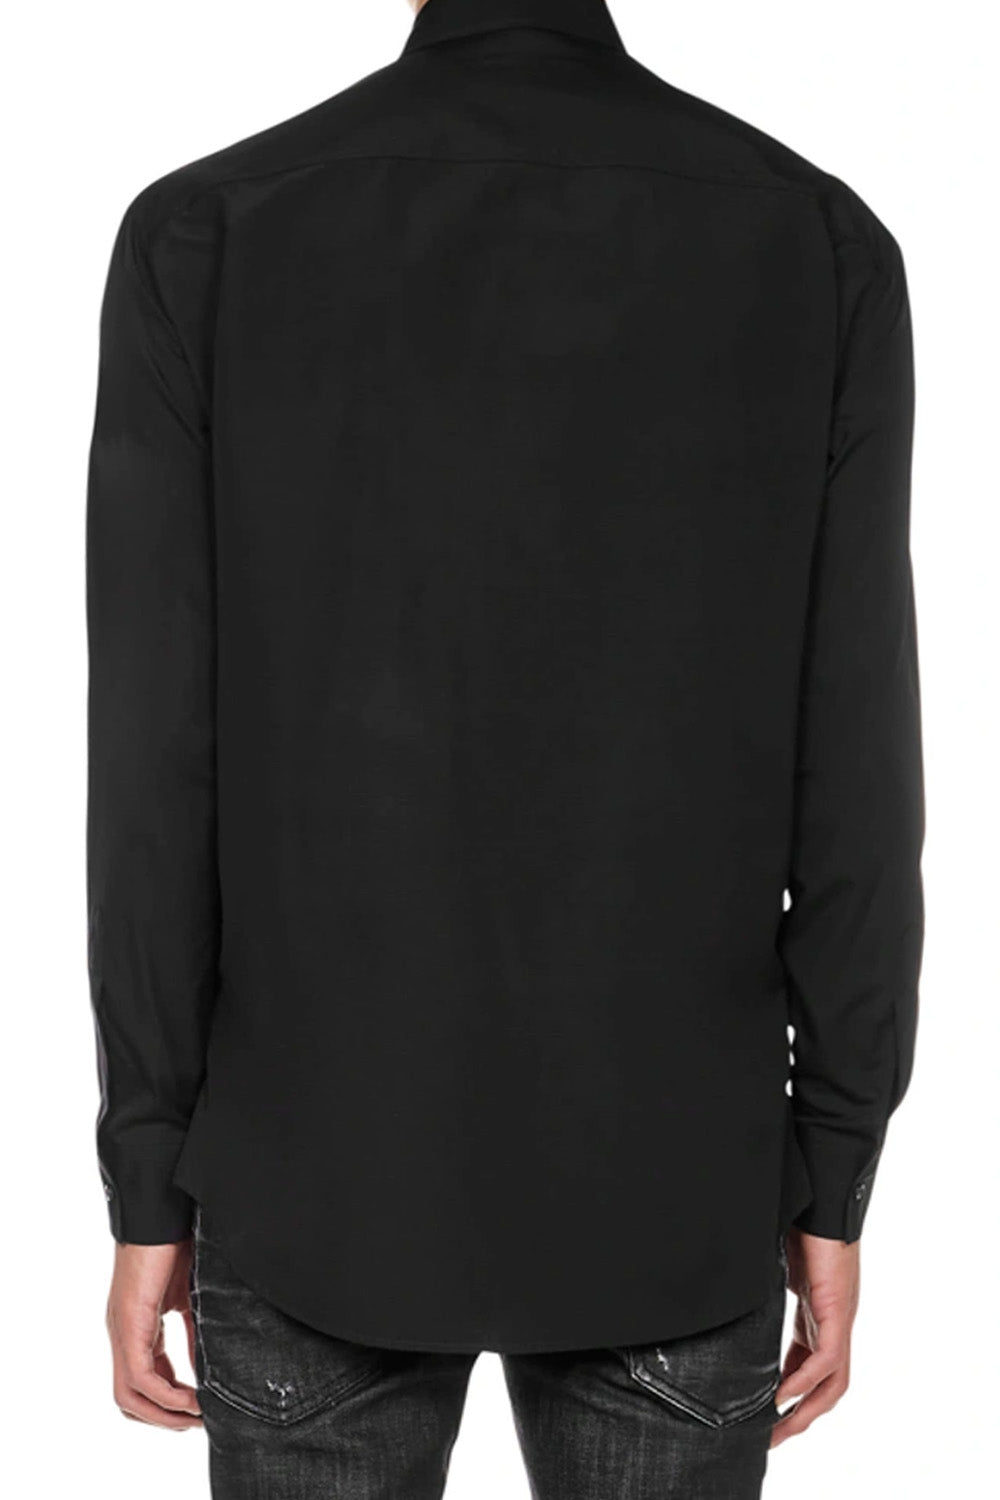 Dsquared2 logo-print black long sleeved shirt